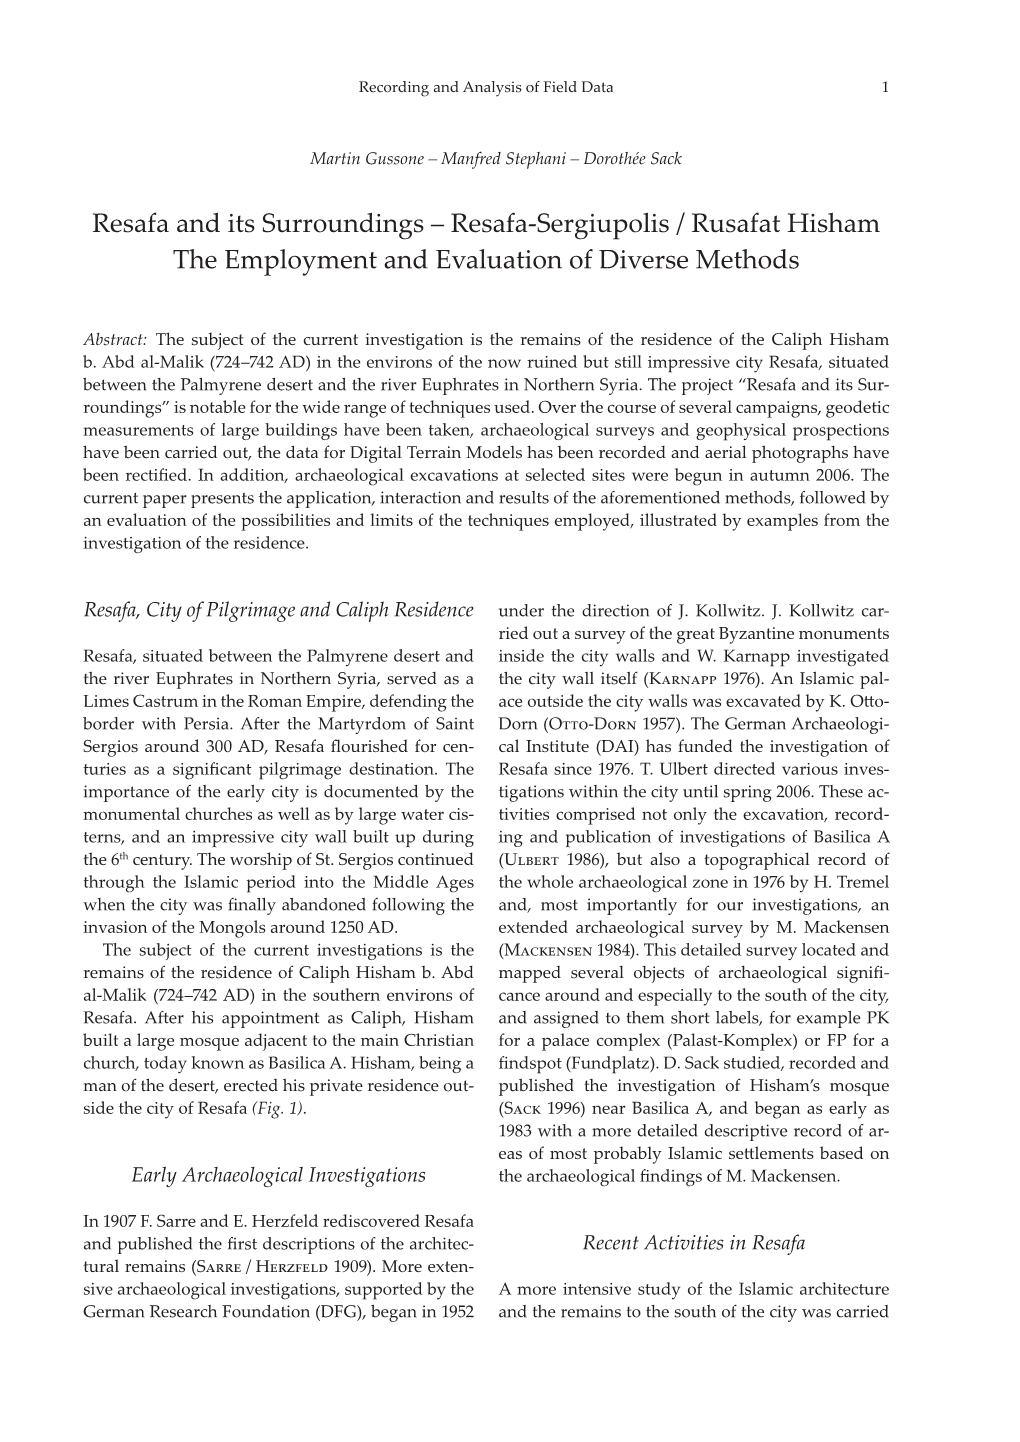 Resafa and Its Surroundings – Resafa-Sergiupolis / Rusafat Hisham the Employment and Evaluation of Diverse Methods